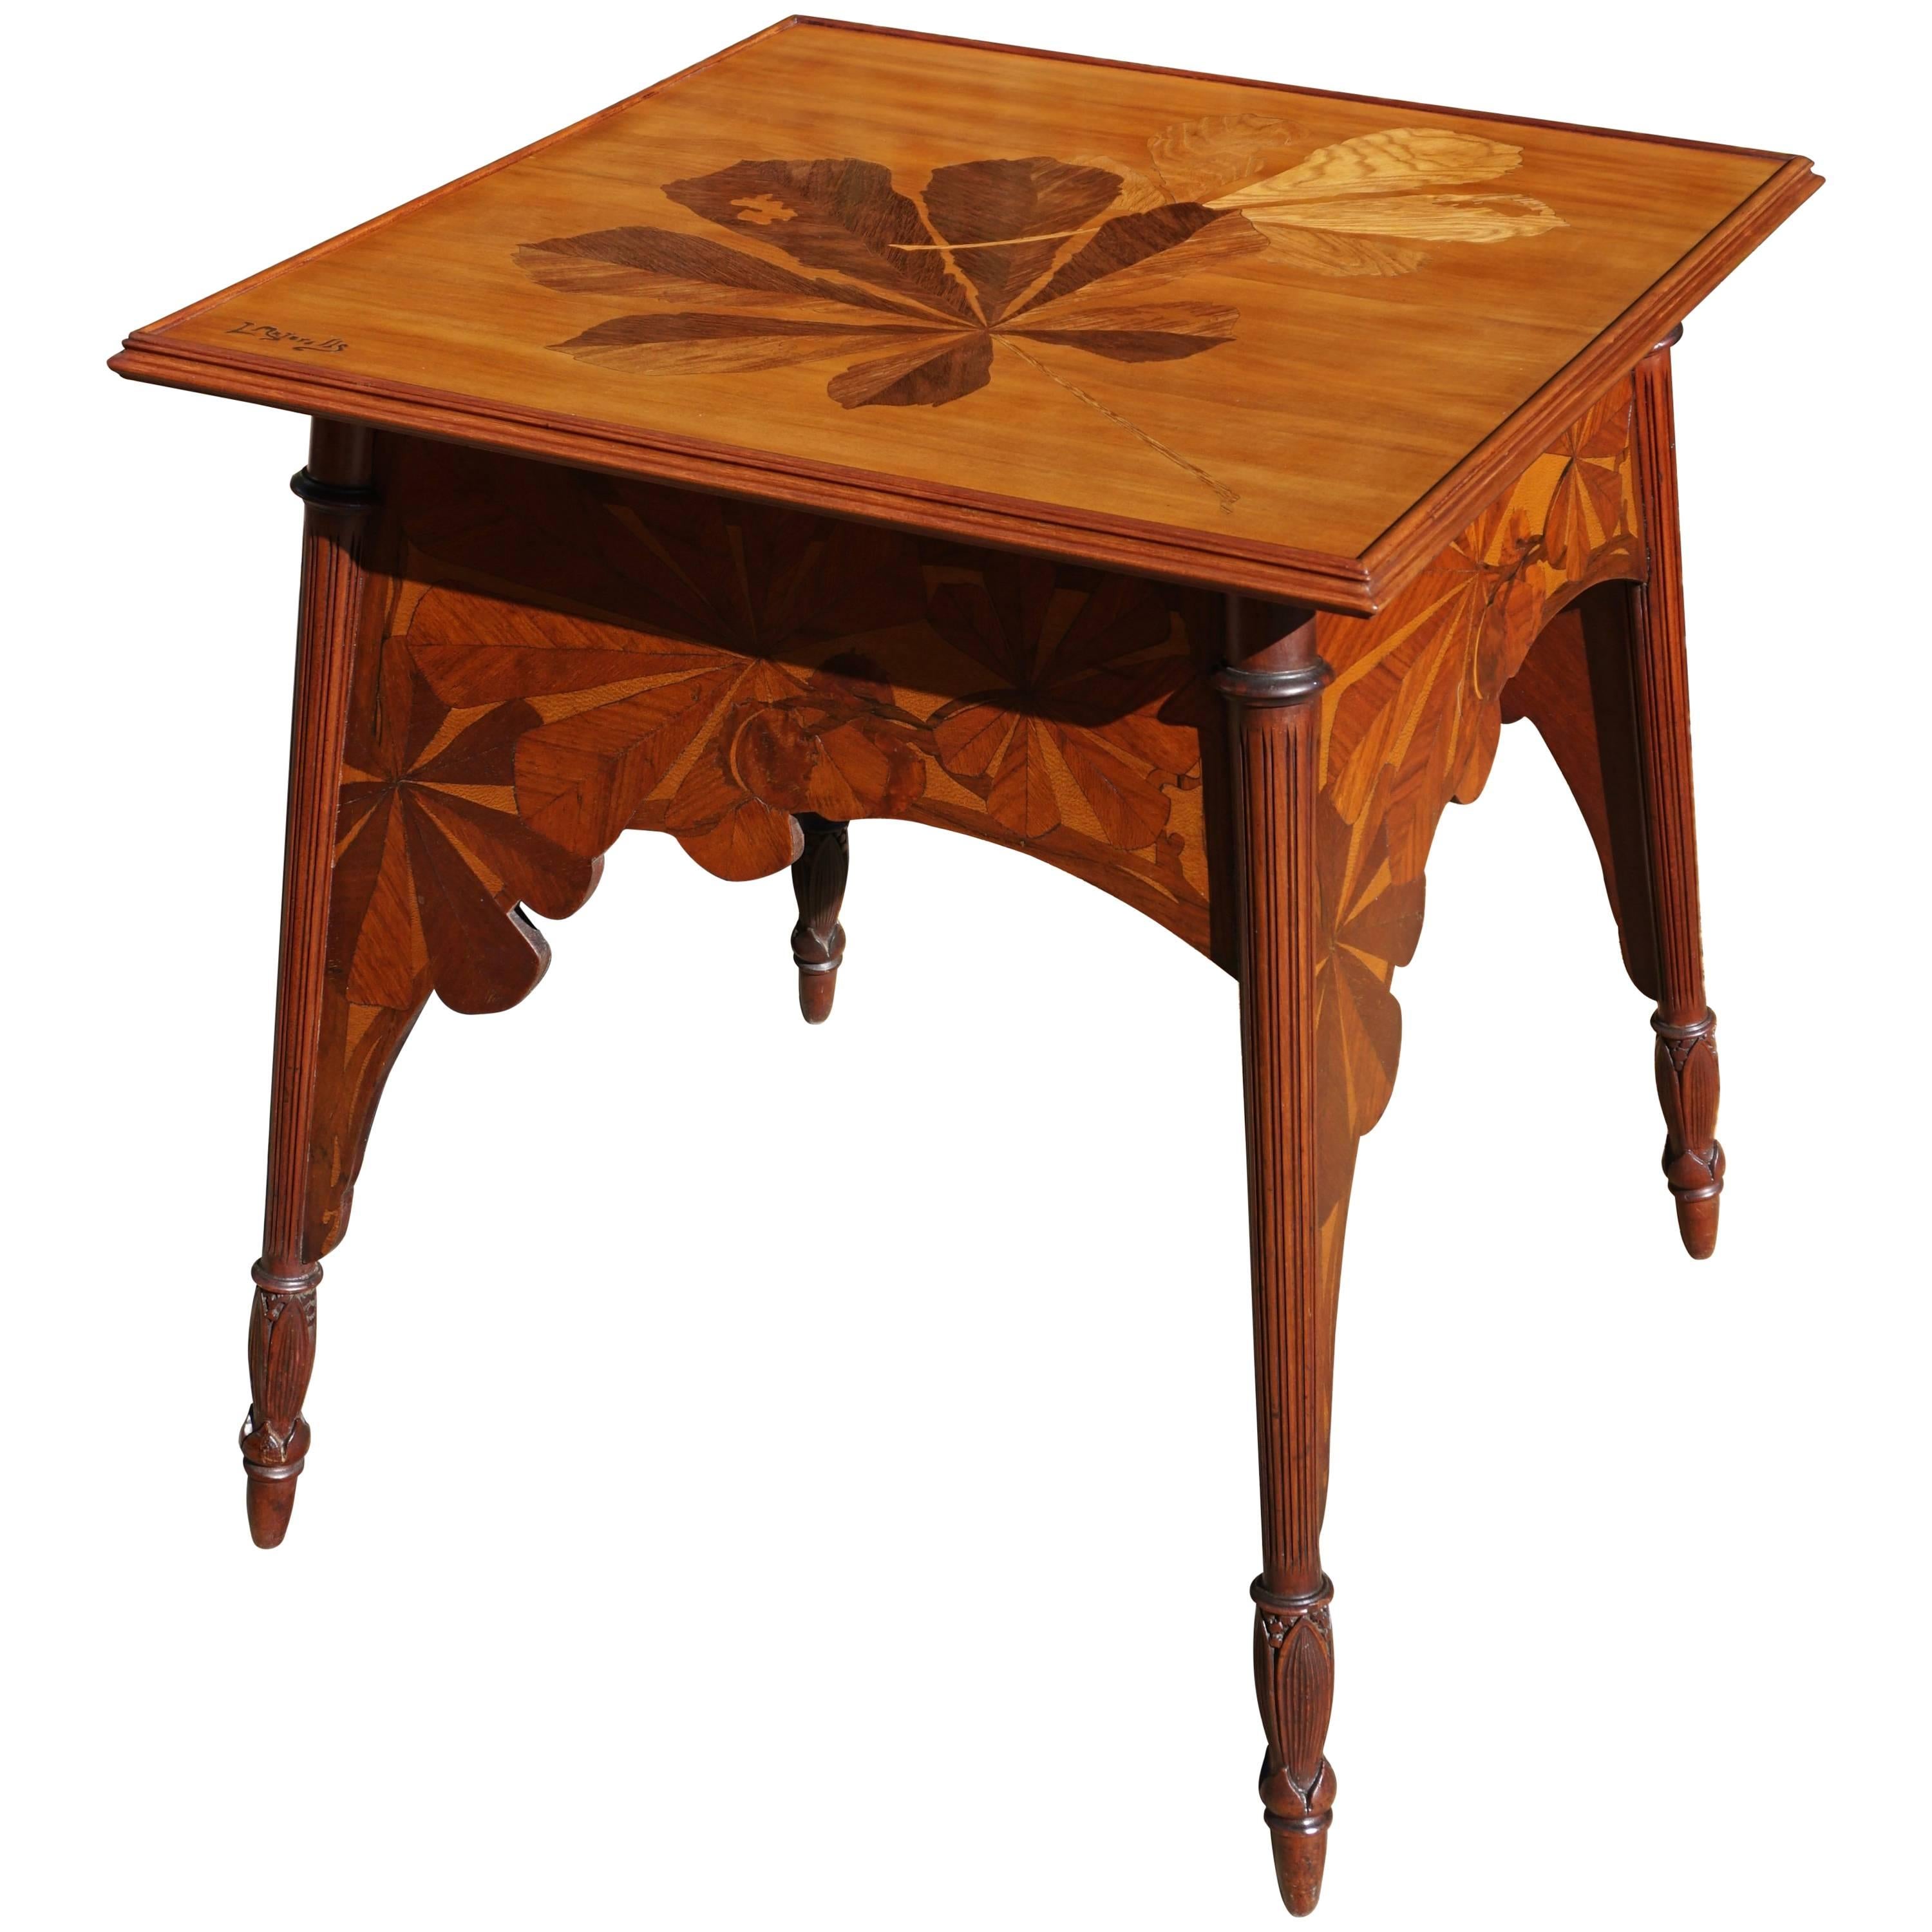 Louis Majorelle Signed French Art Nouveau Game Table, circa 1900